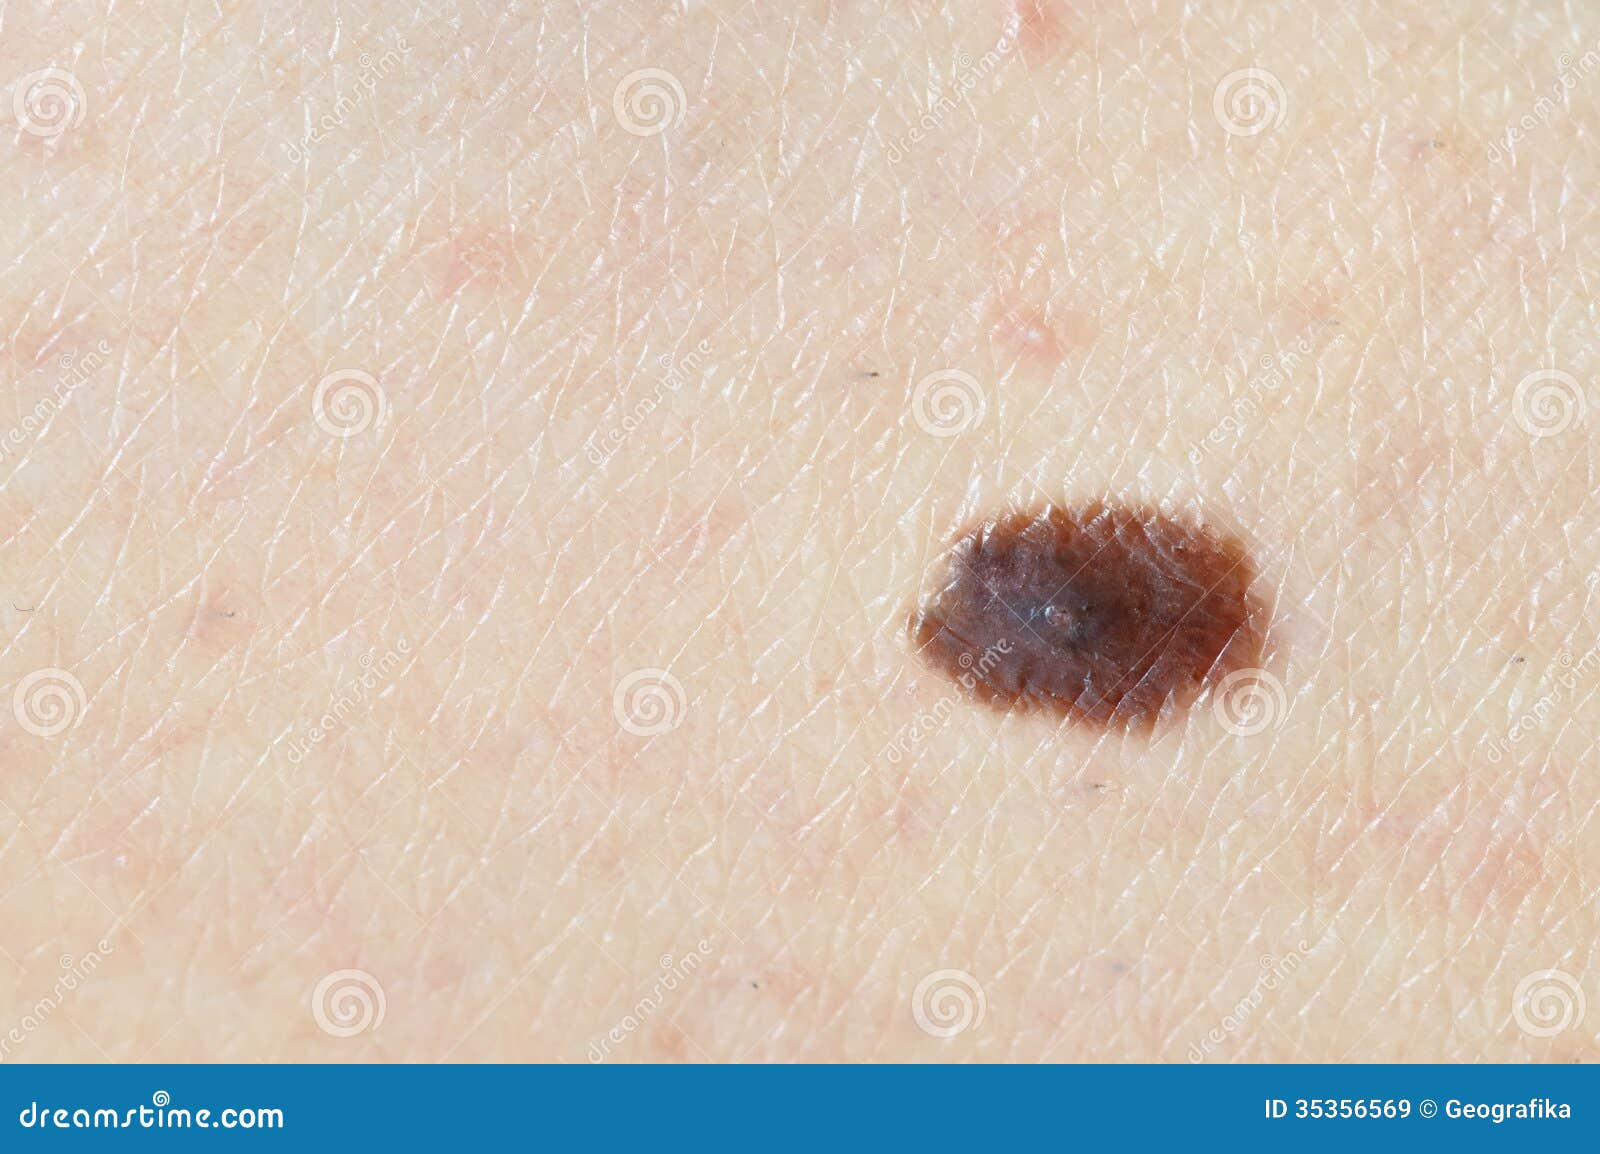 brown birthmark (nevus) on caucasian woman leg.